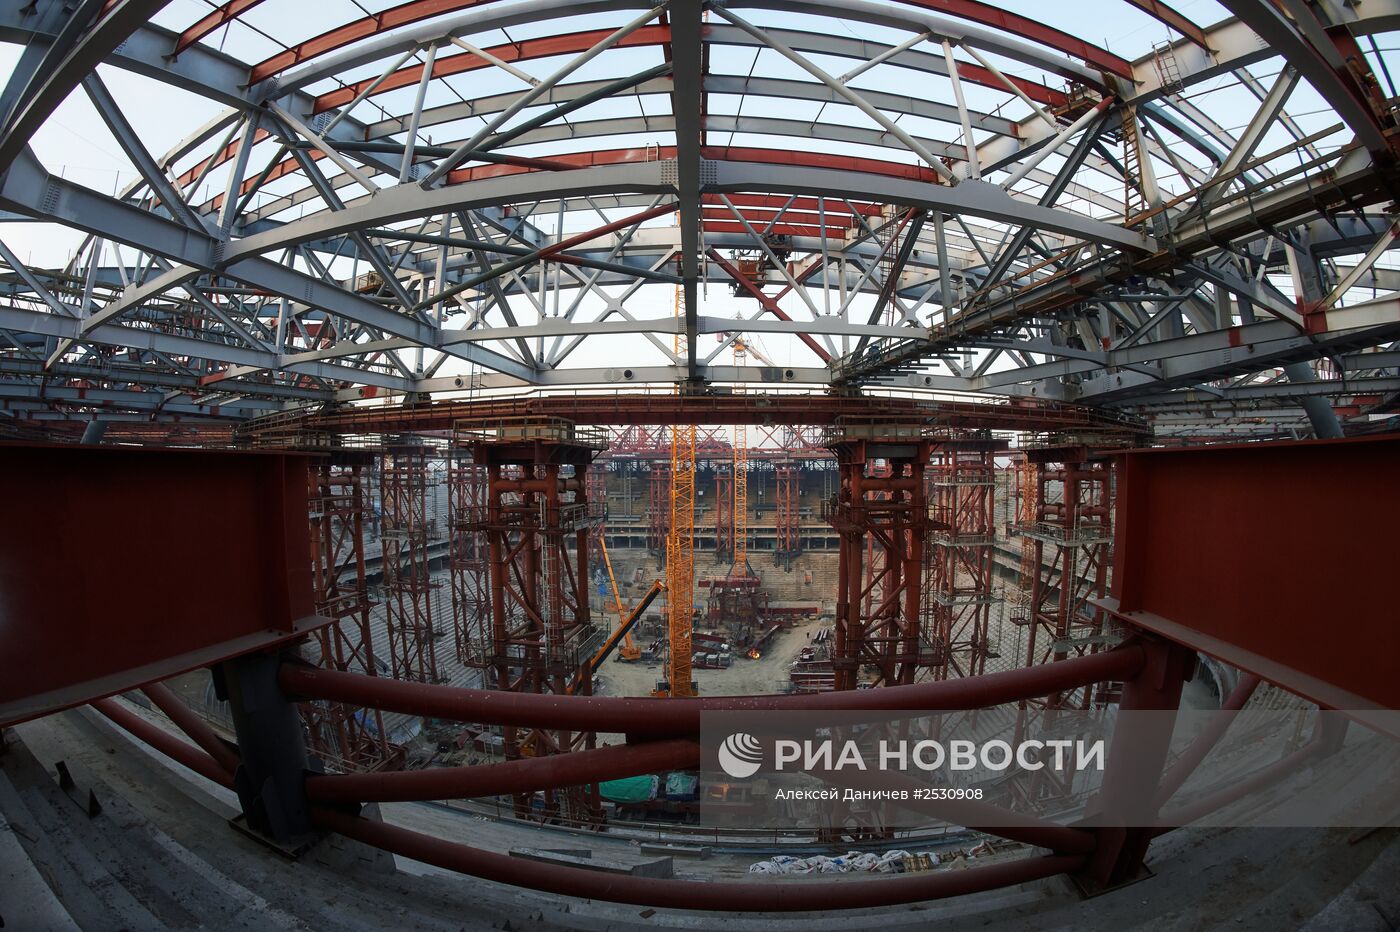 Строительство стадиона "Зенит-Арена"